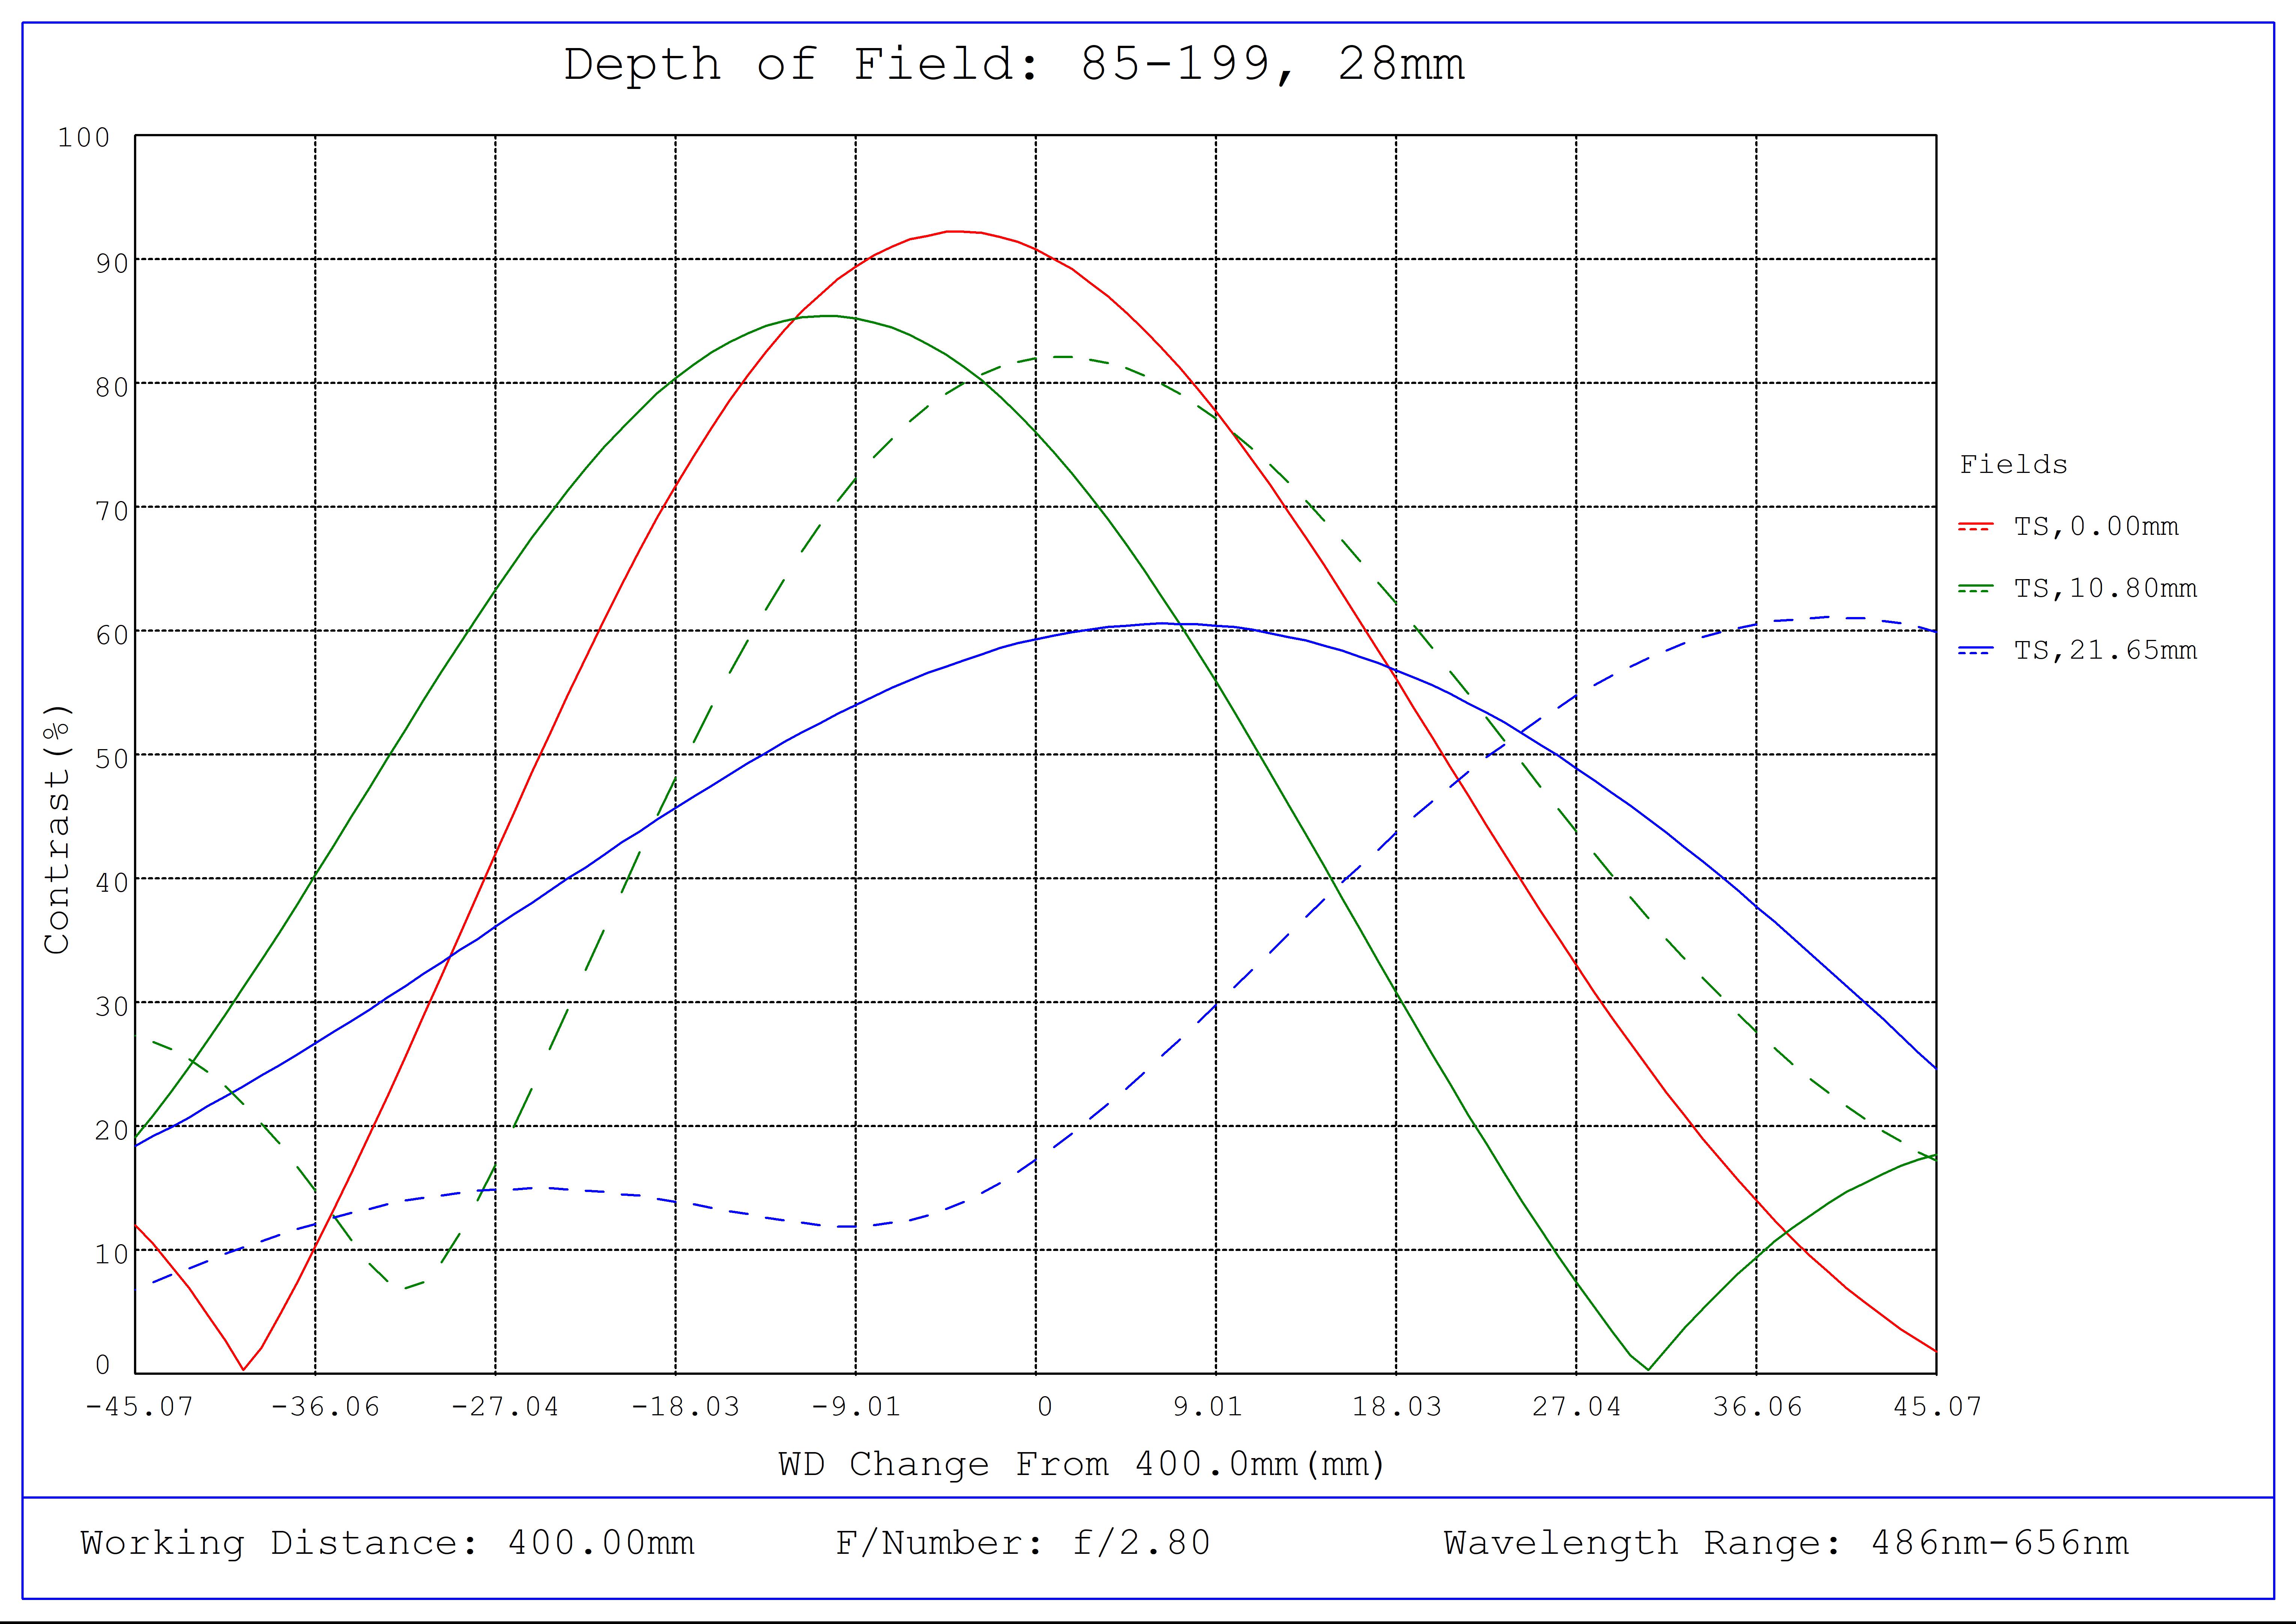 #85-199, 28mm Short Working Distance, LF Series Fixed Focal Length Lens, Depth of Field Plot, 400mm Working Distance, f2.8